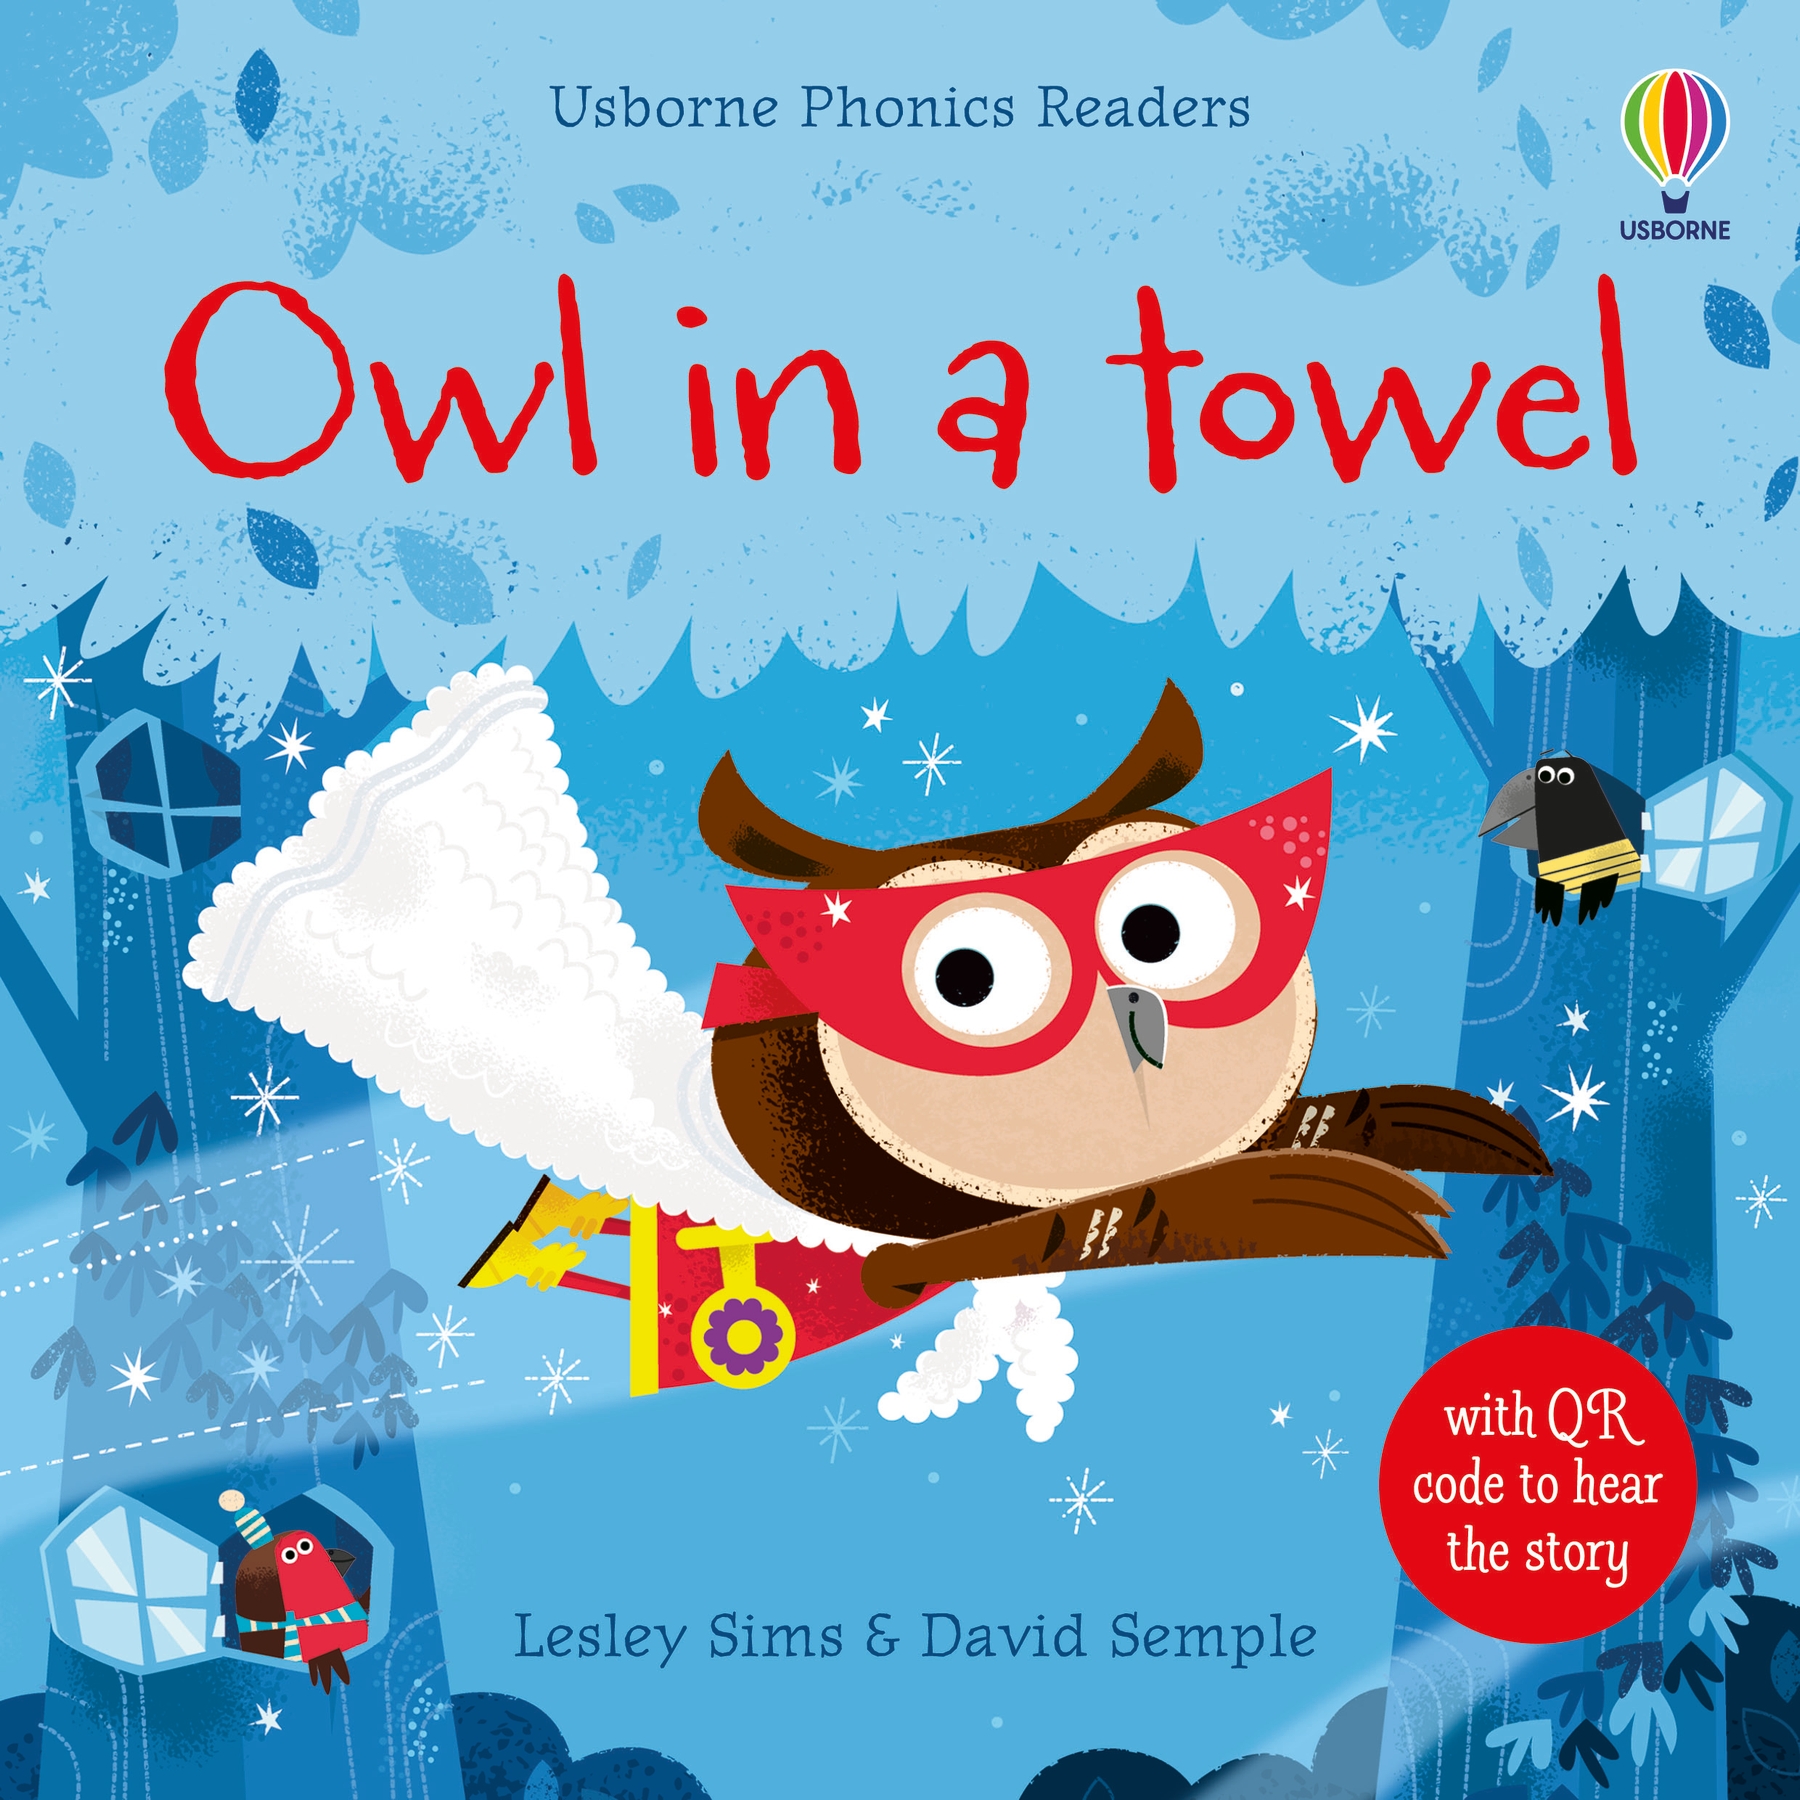 Owl in a Towel